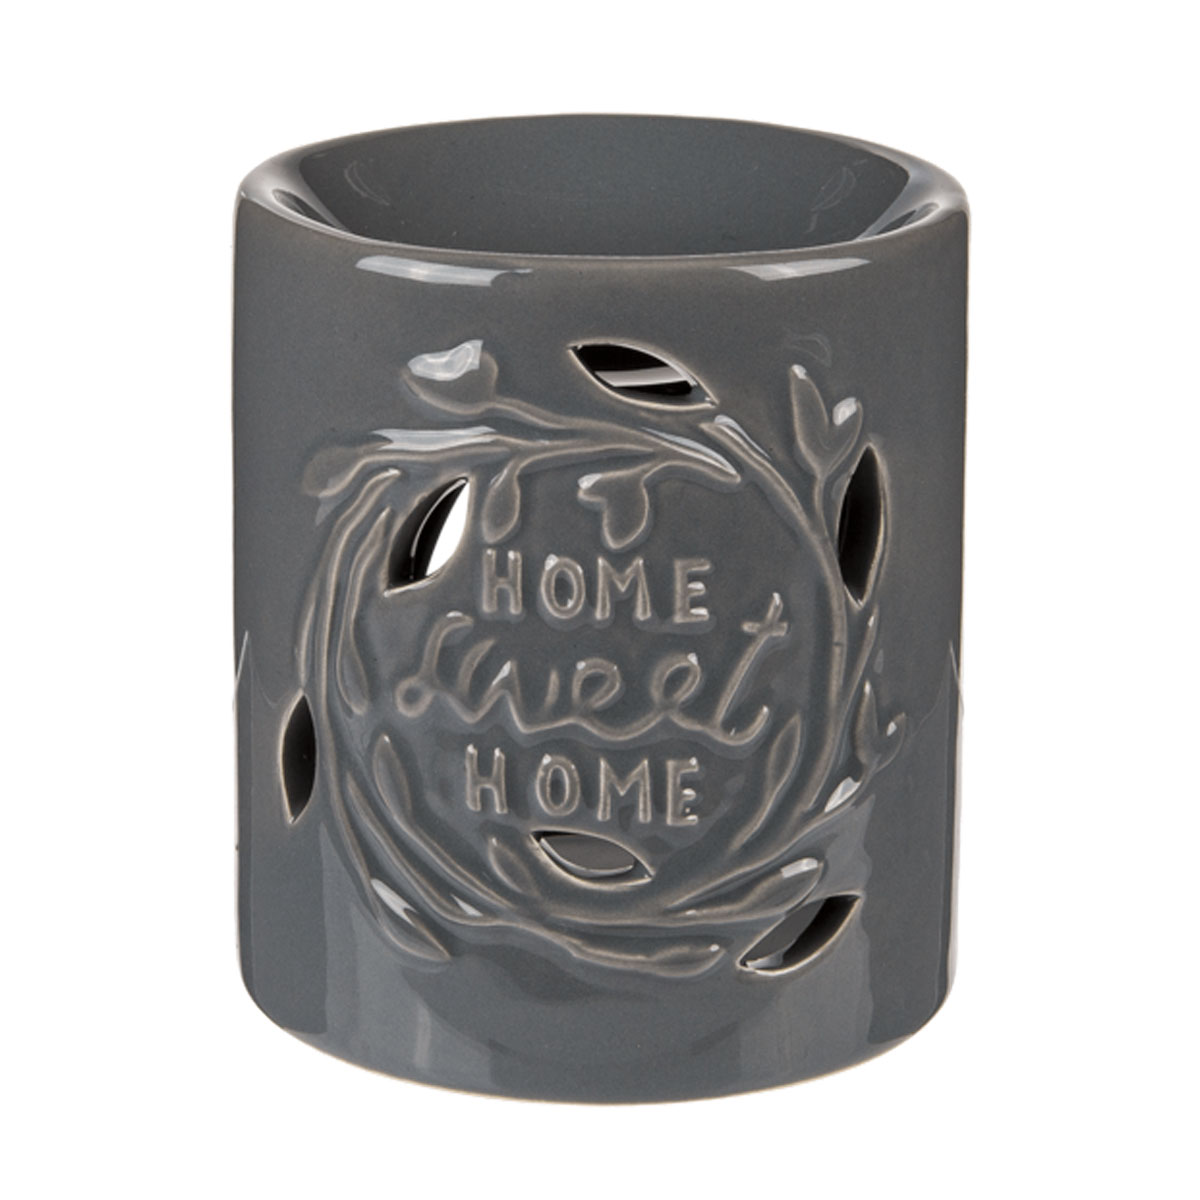 Ceramic home sweet home Incense Burner